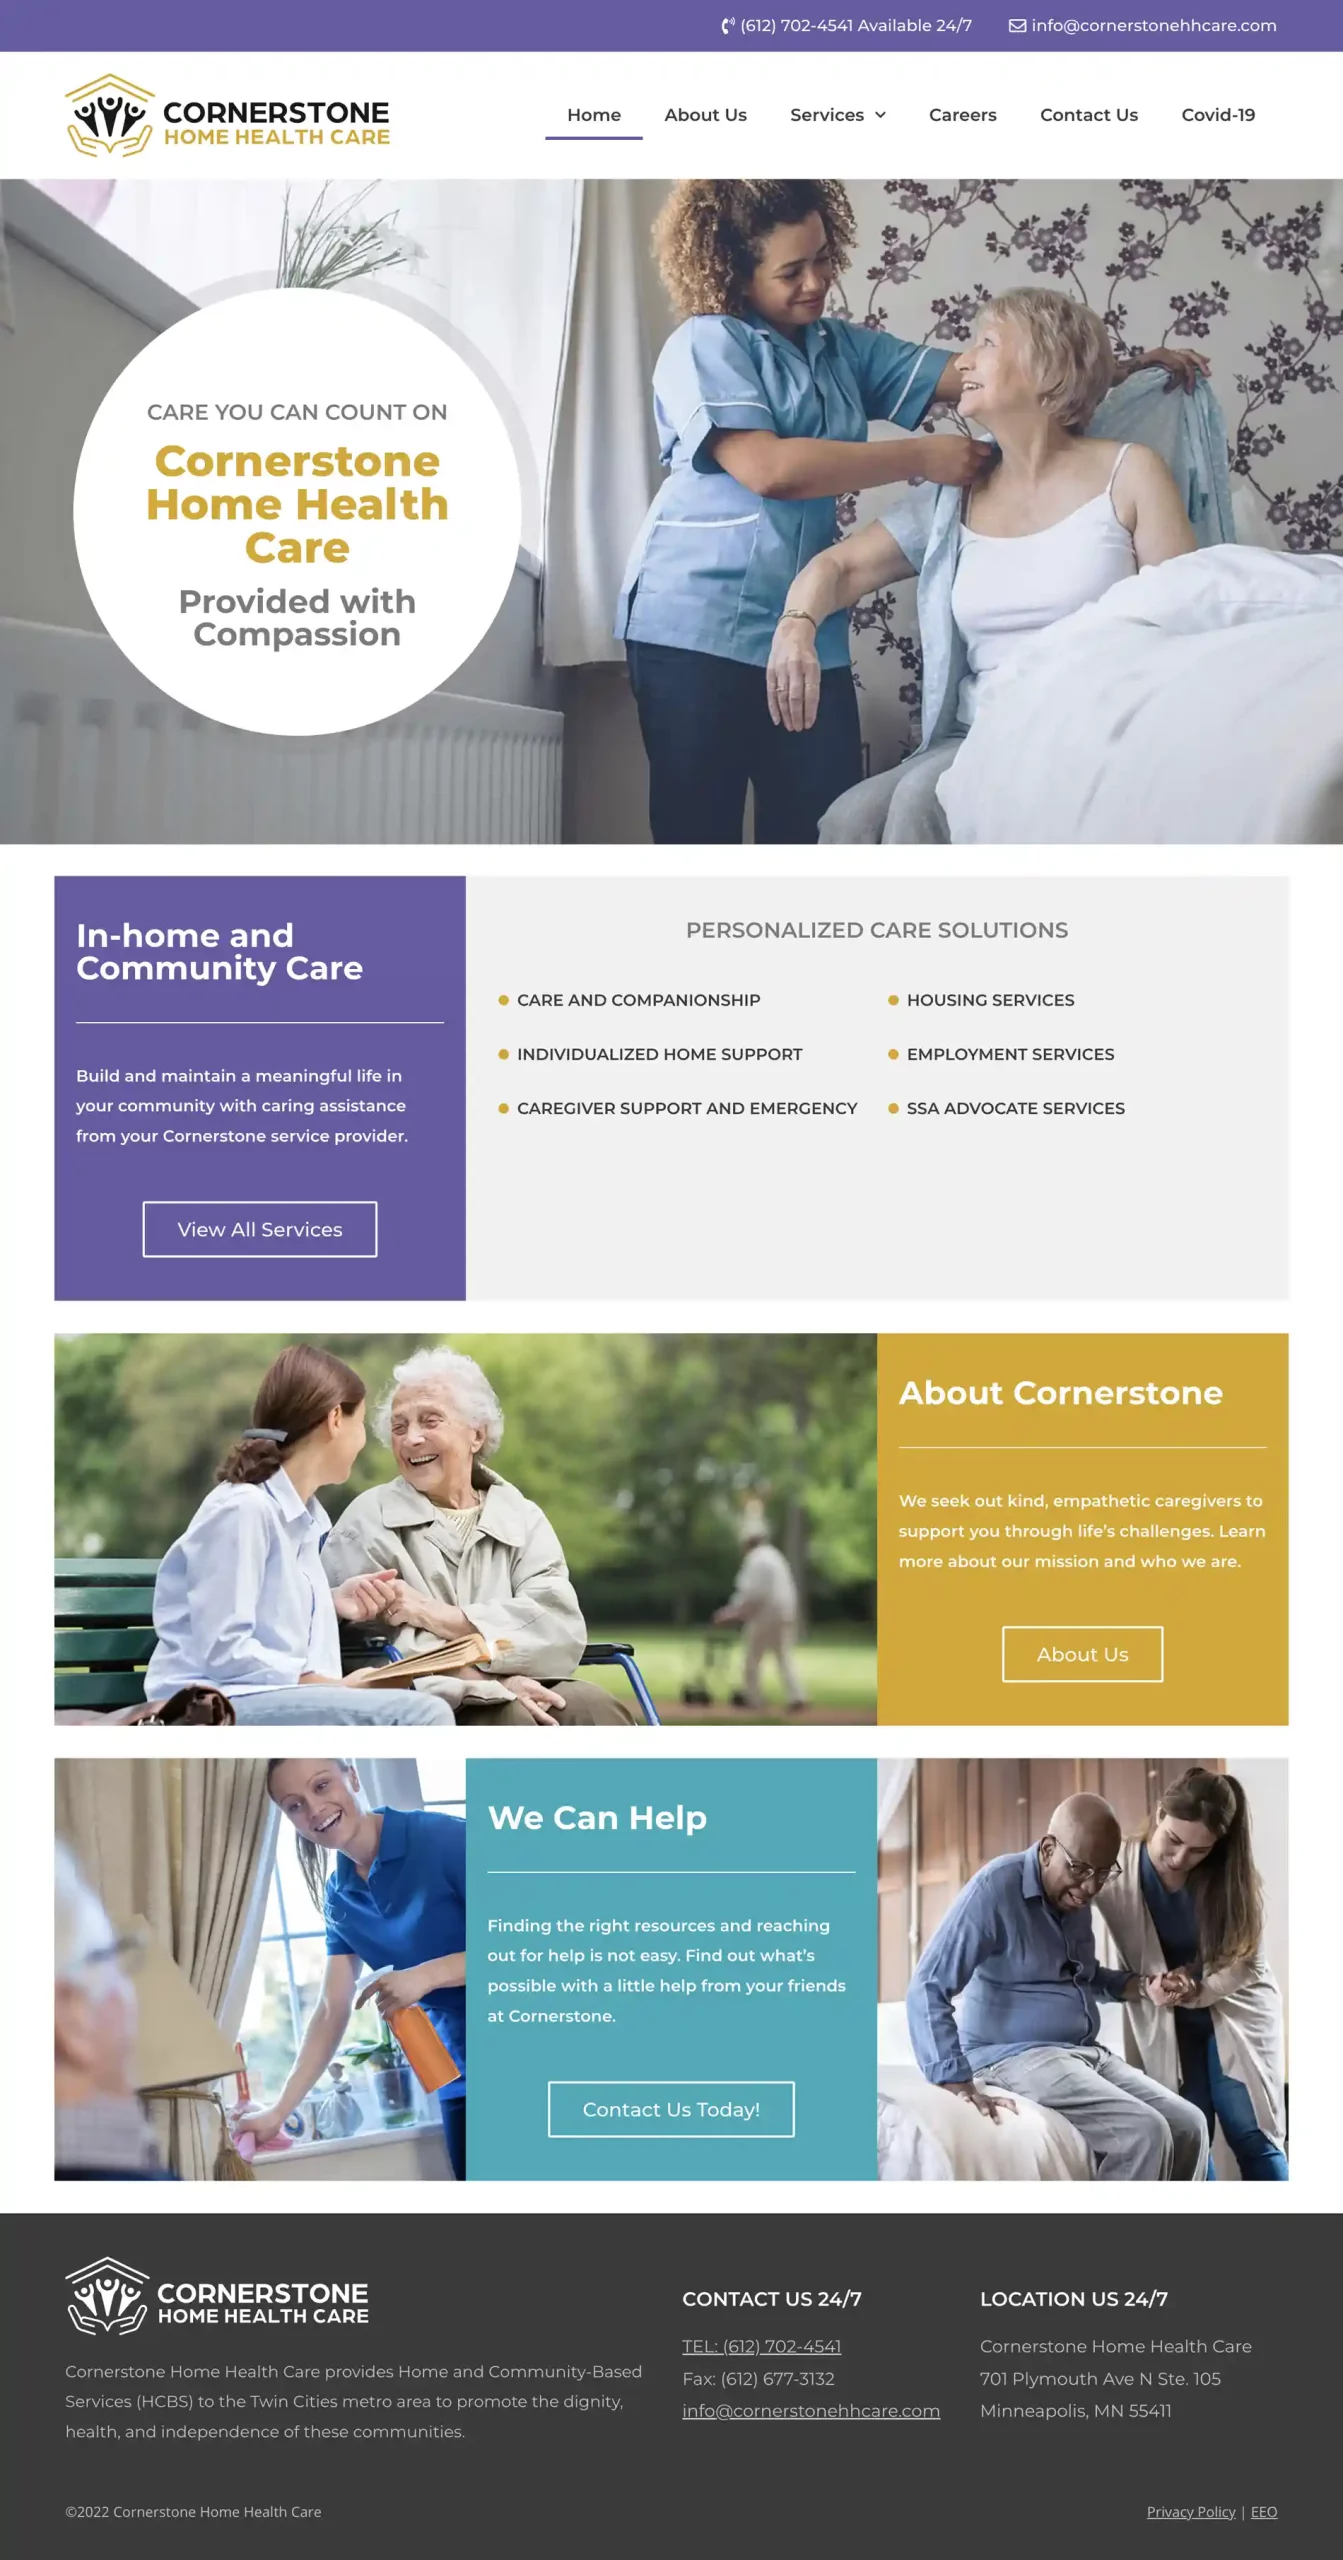 Cornerstone Home Health Care homepage image